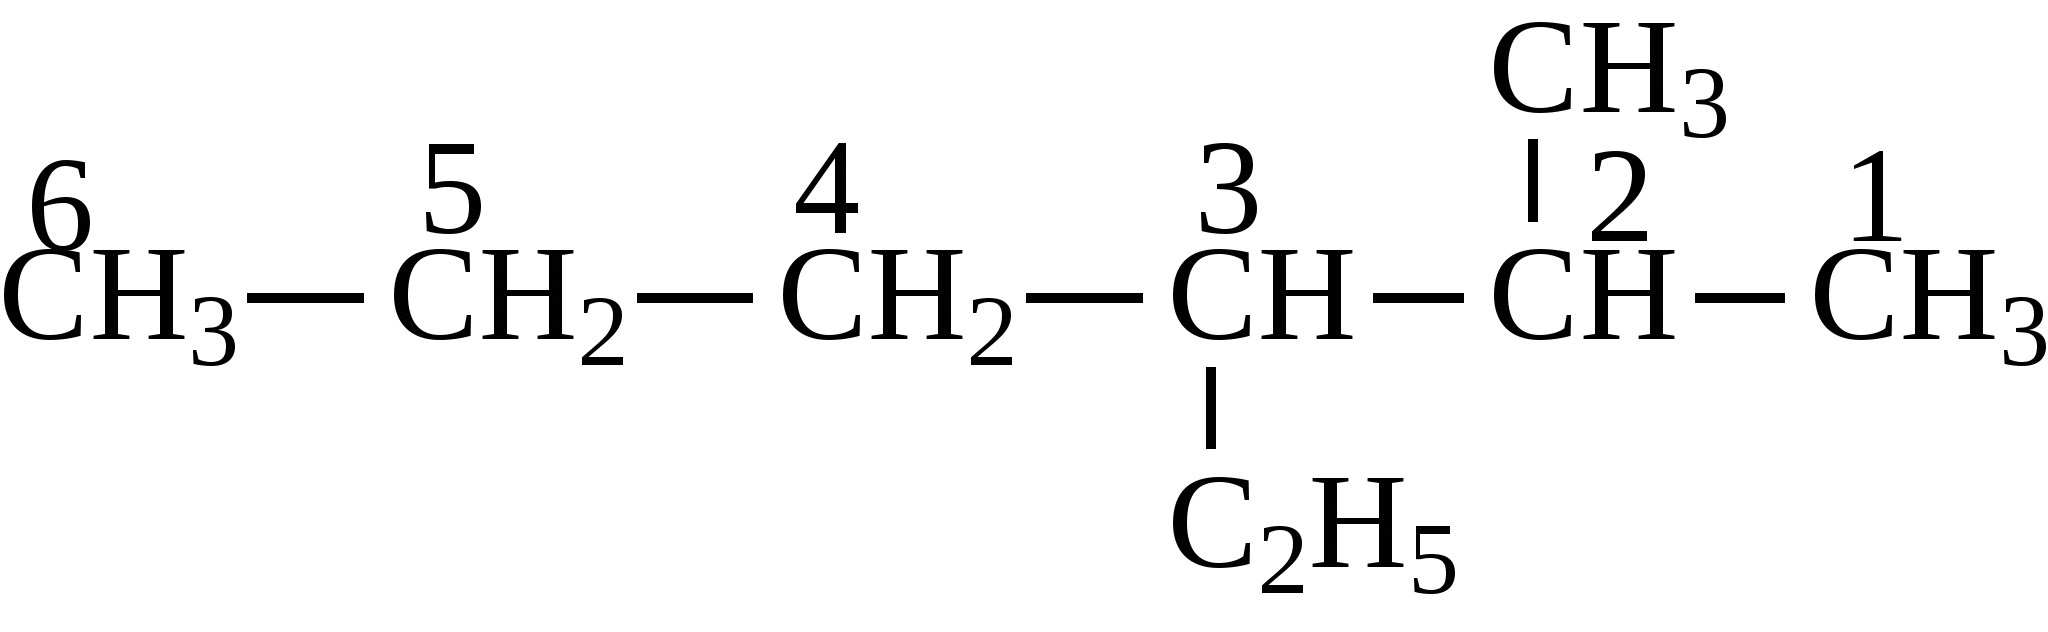 2 3 этил гексан